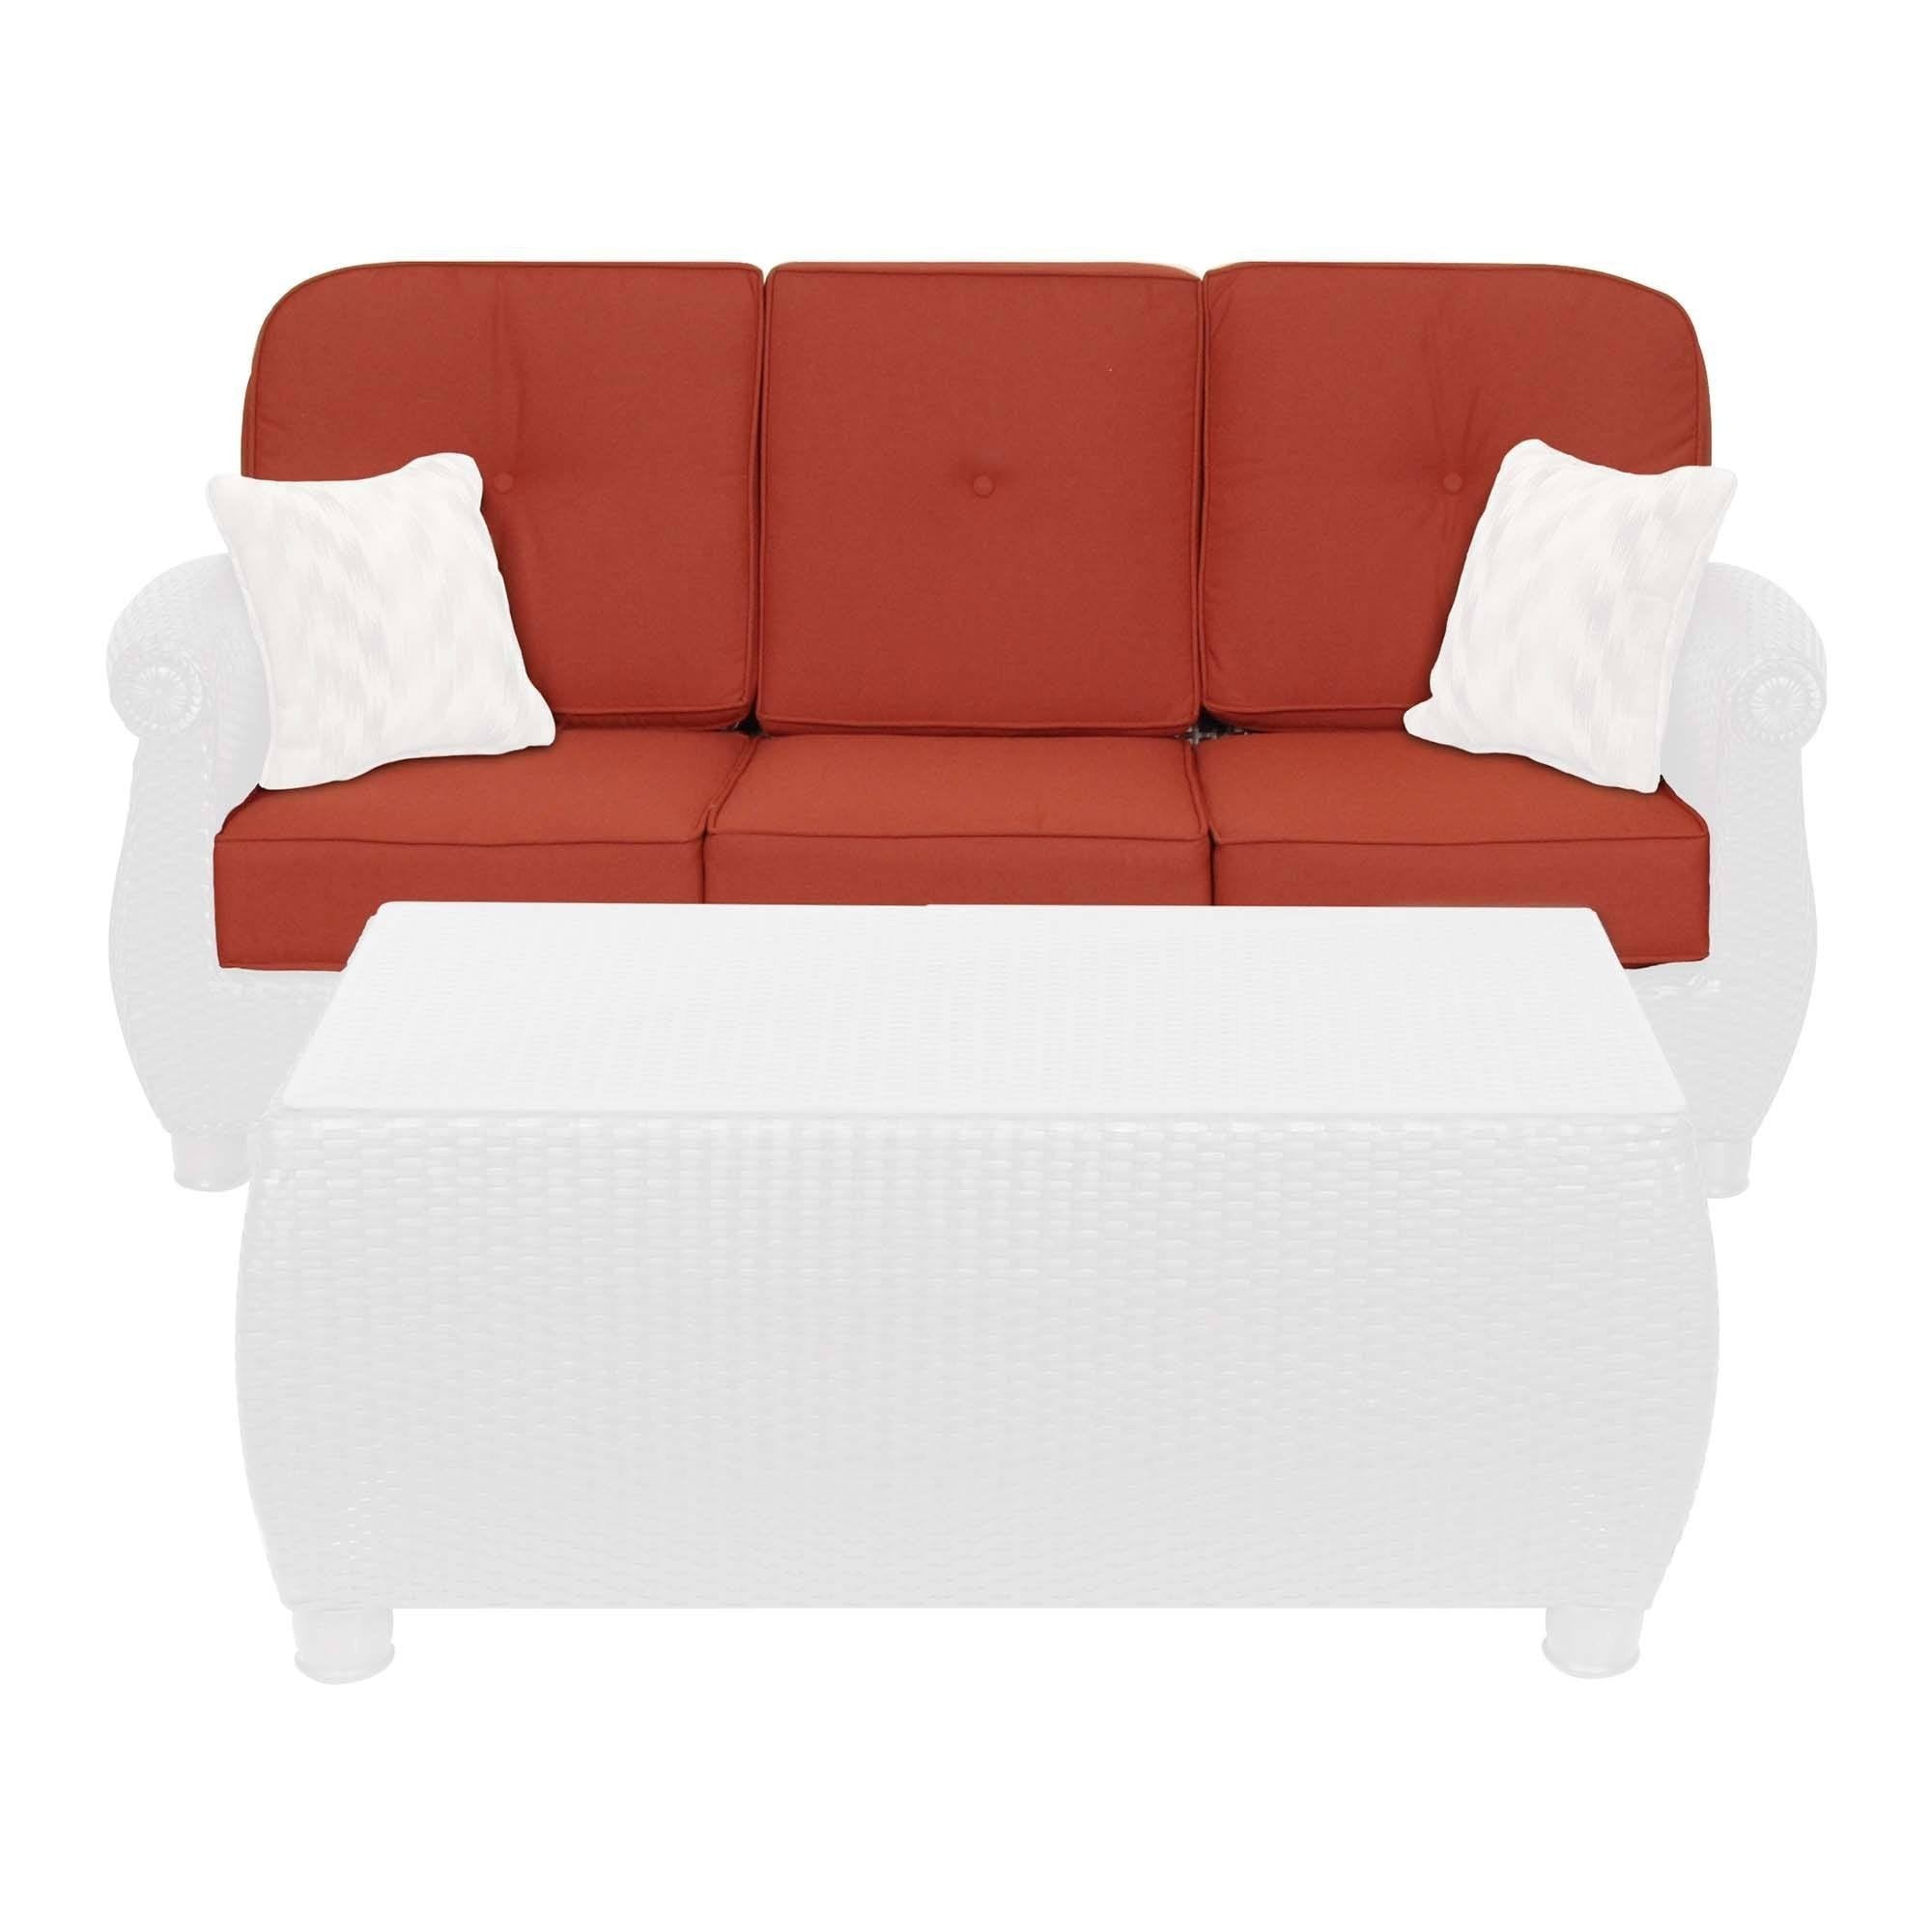 Breckenridge Outdoor Sofa Replacement Cushion Set La Z Boy Outdoor